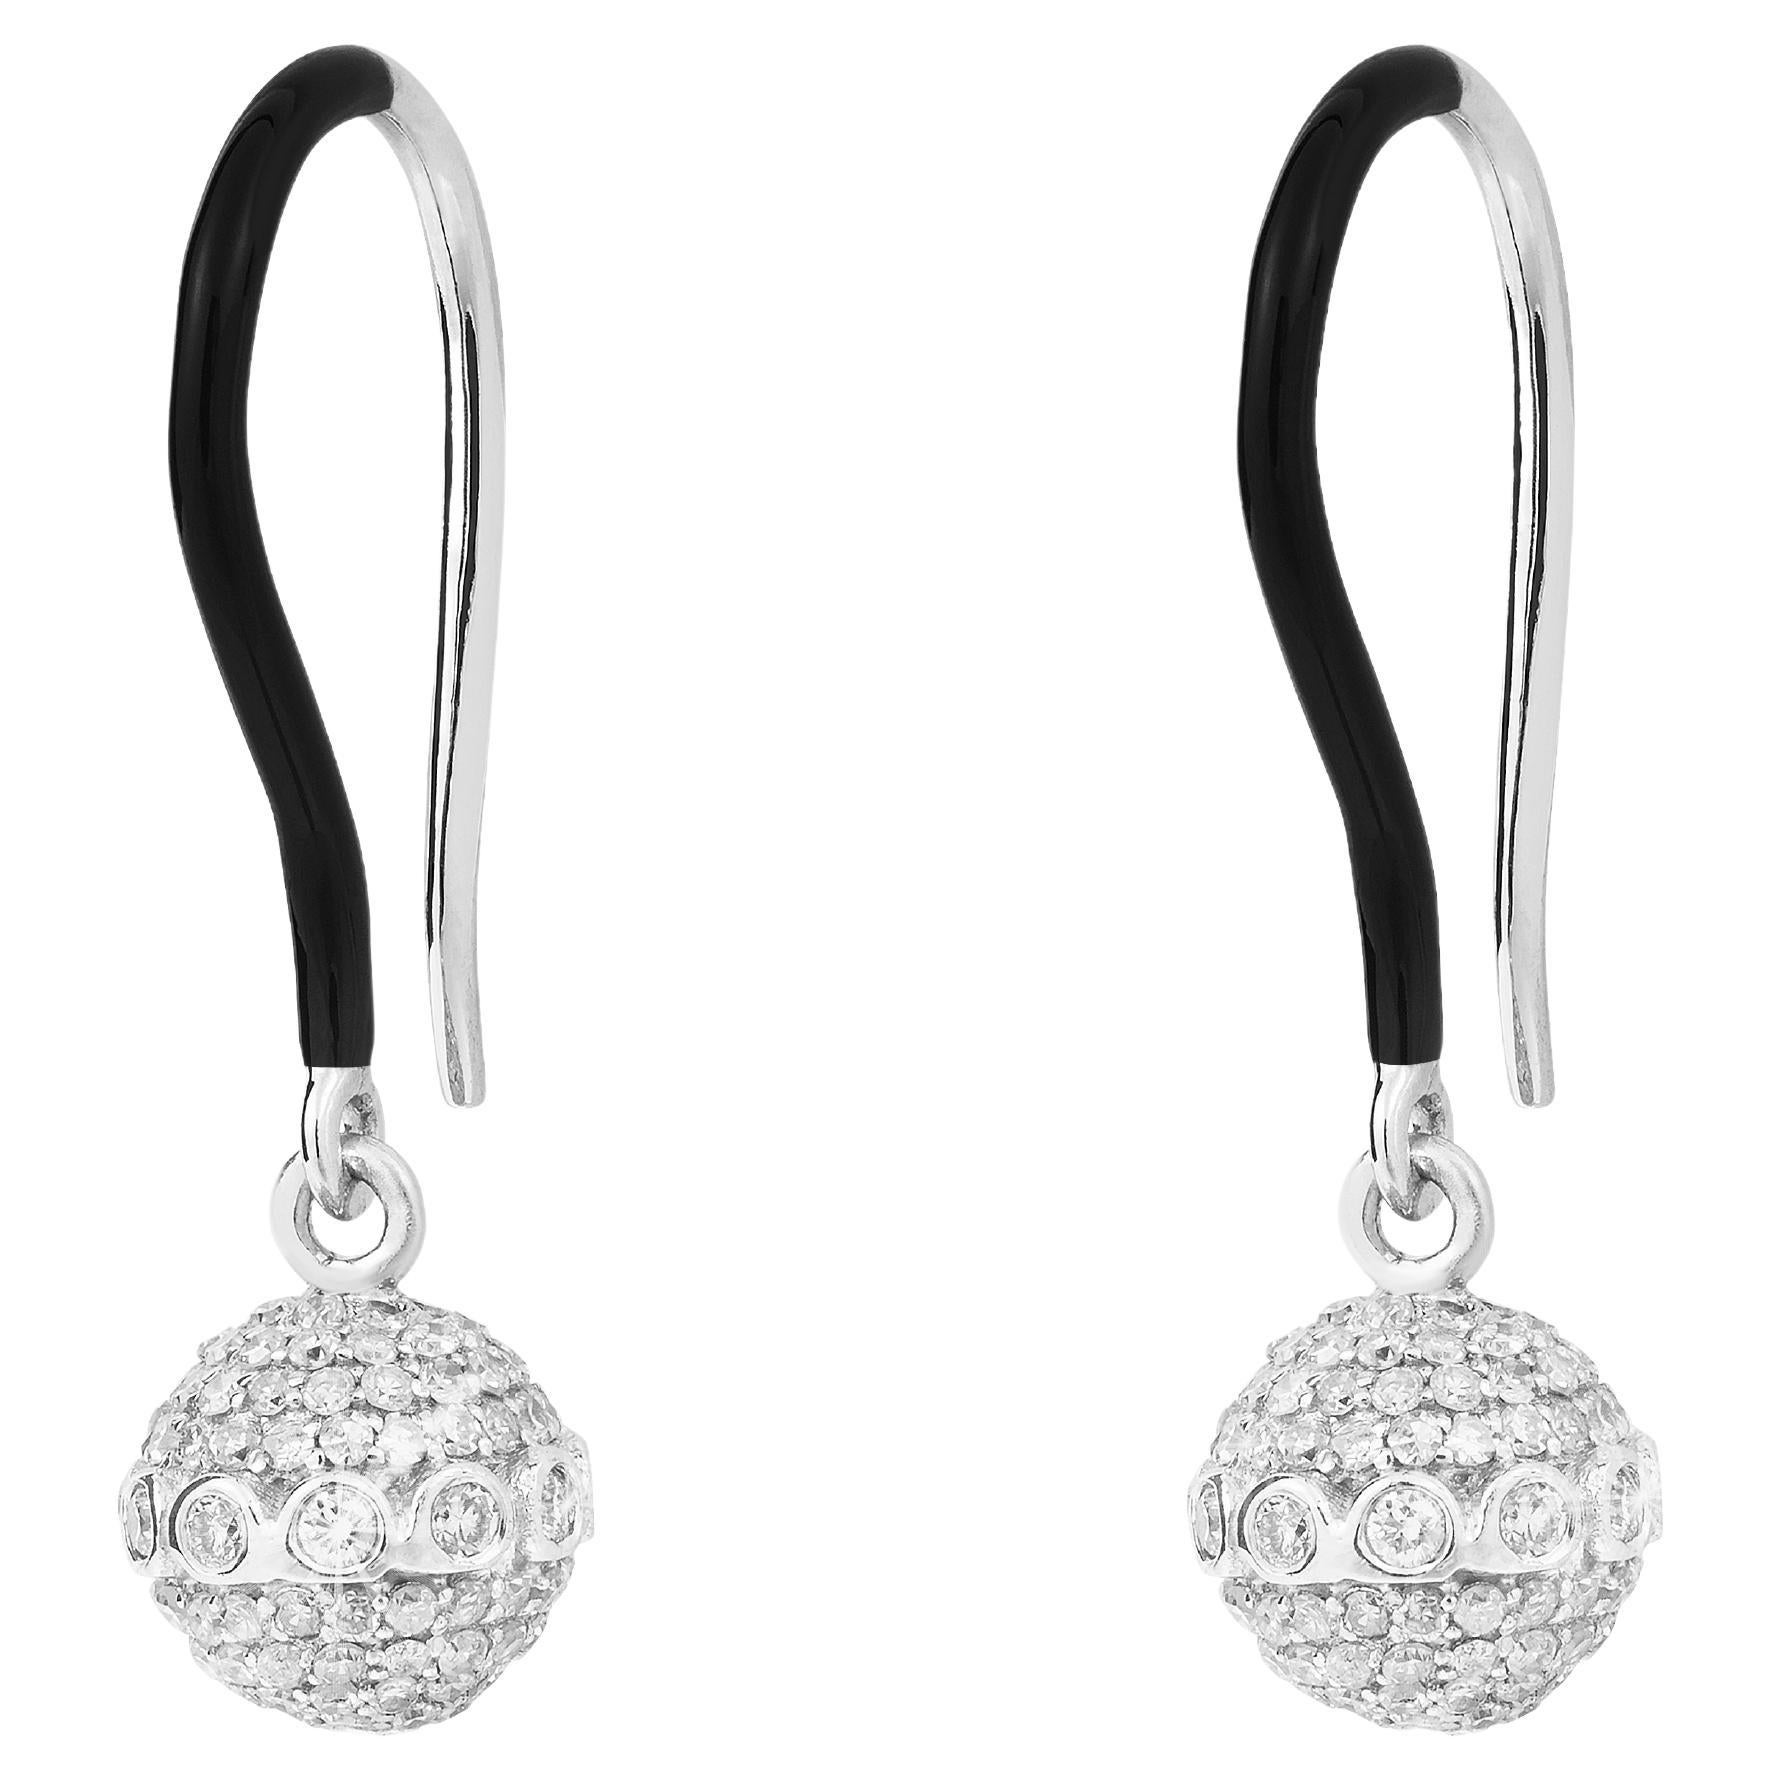 18k White Gold Earrings with Diamond-Encrusted Orbs and Black Enamel